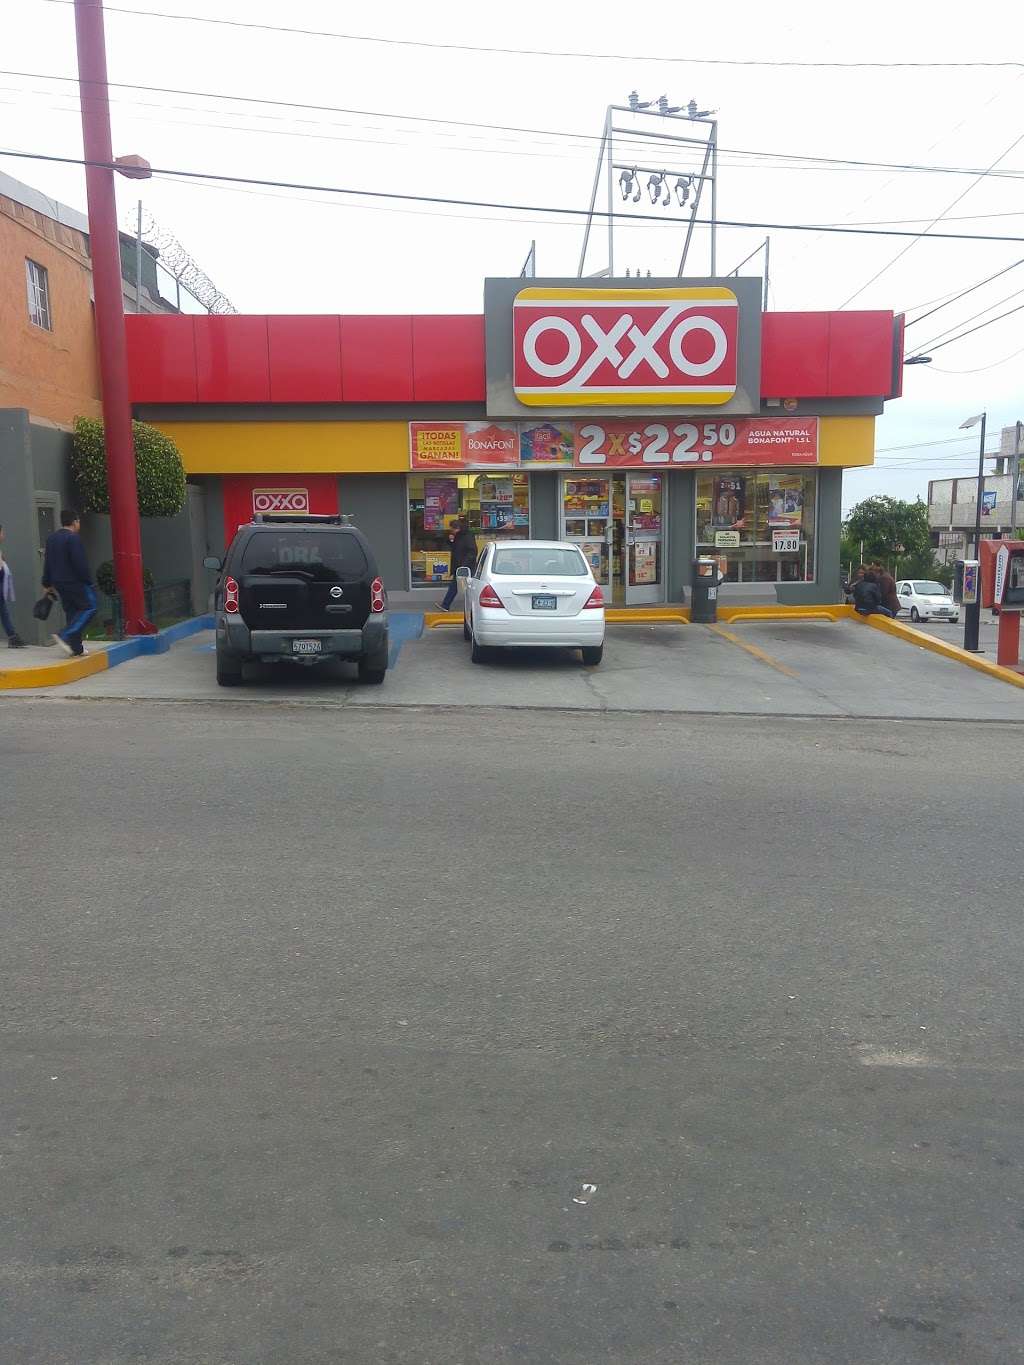 OXXO | Evangelina Elizondo 3592, Miramar, 22526 Tijuana, B.C., Mexico | Phone: 81 8320 2020